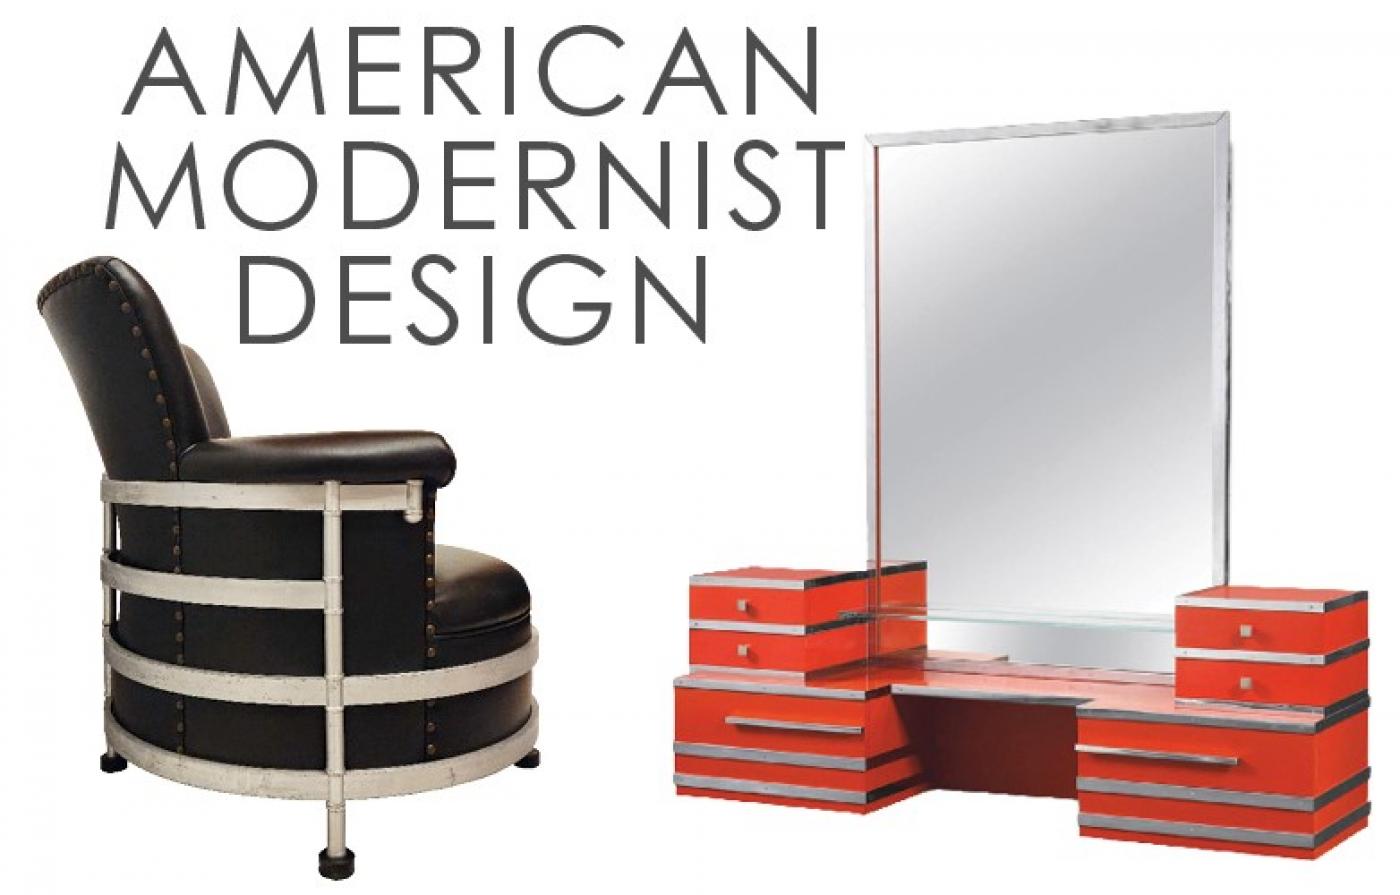 American Modernist Design